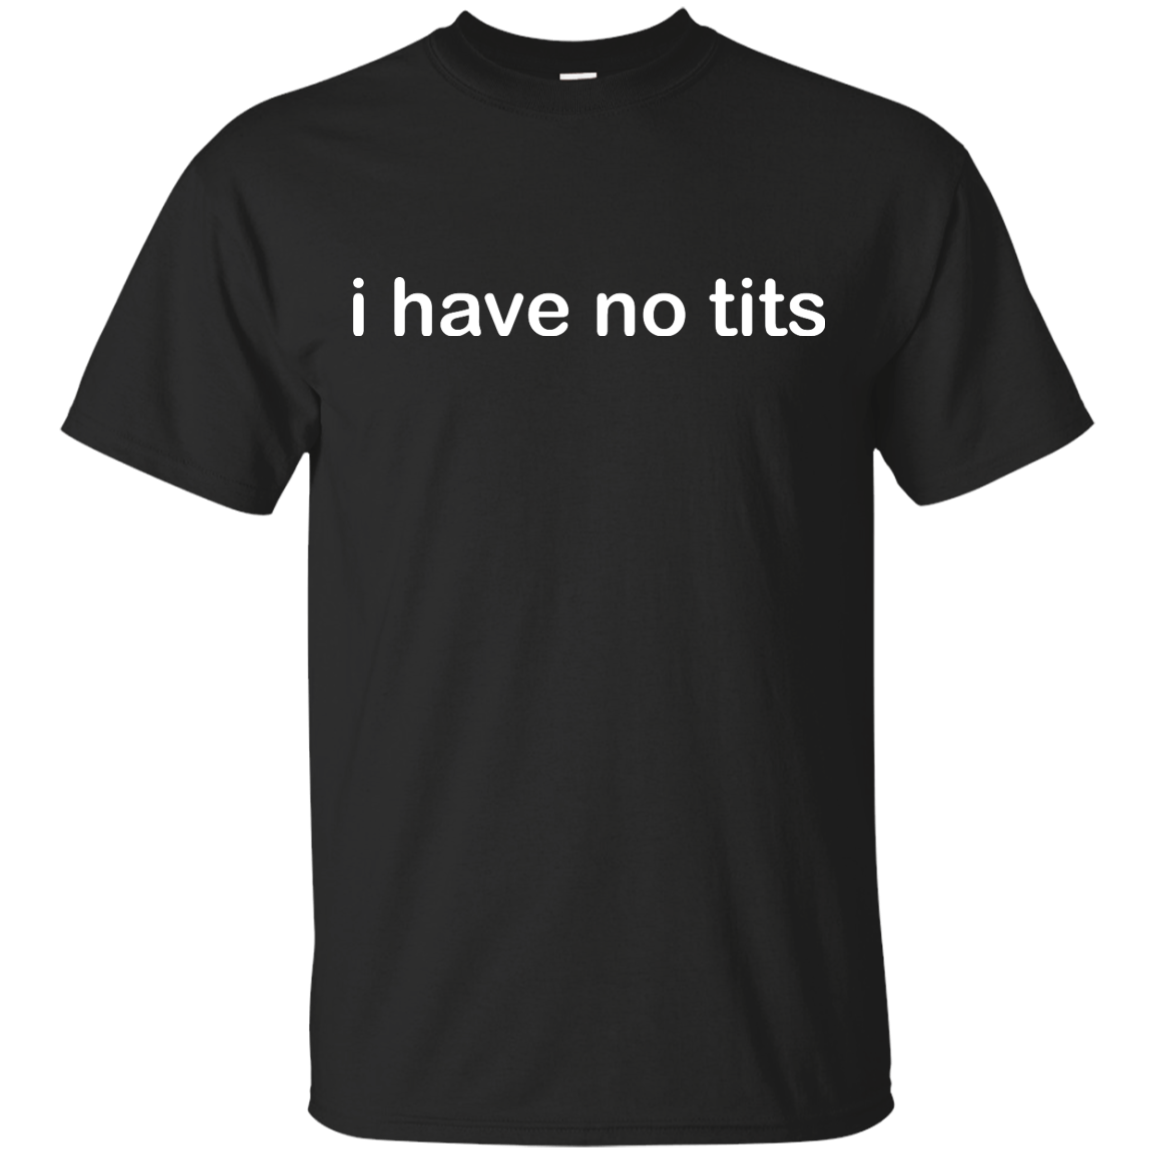 Funny t-shirt: I Have No Tits shirt, hoodie, tank